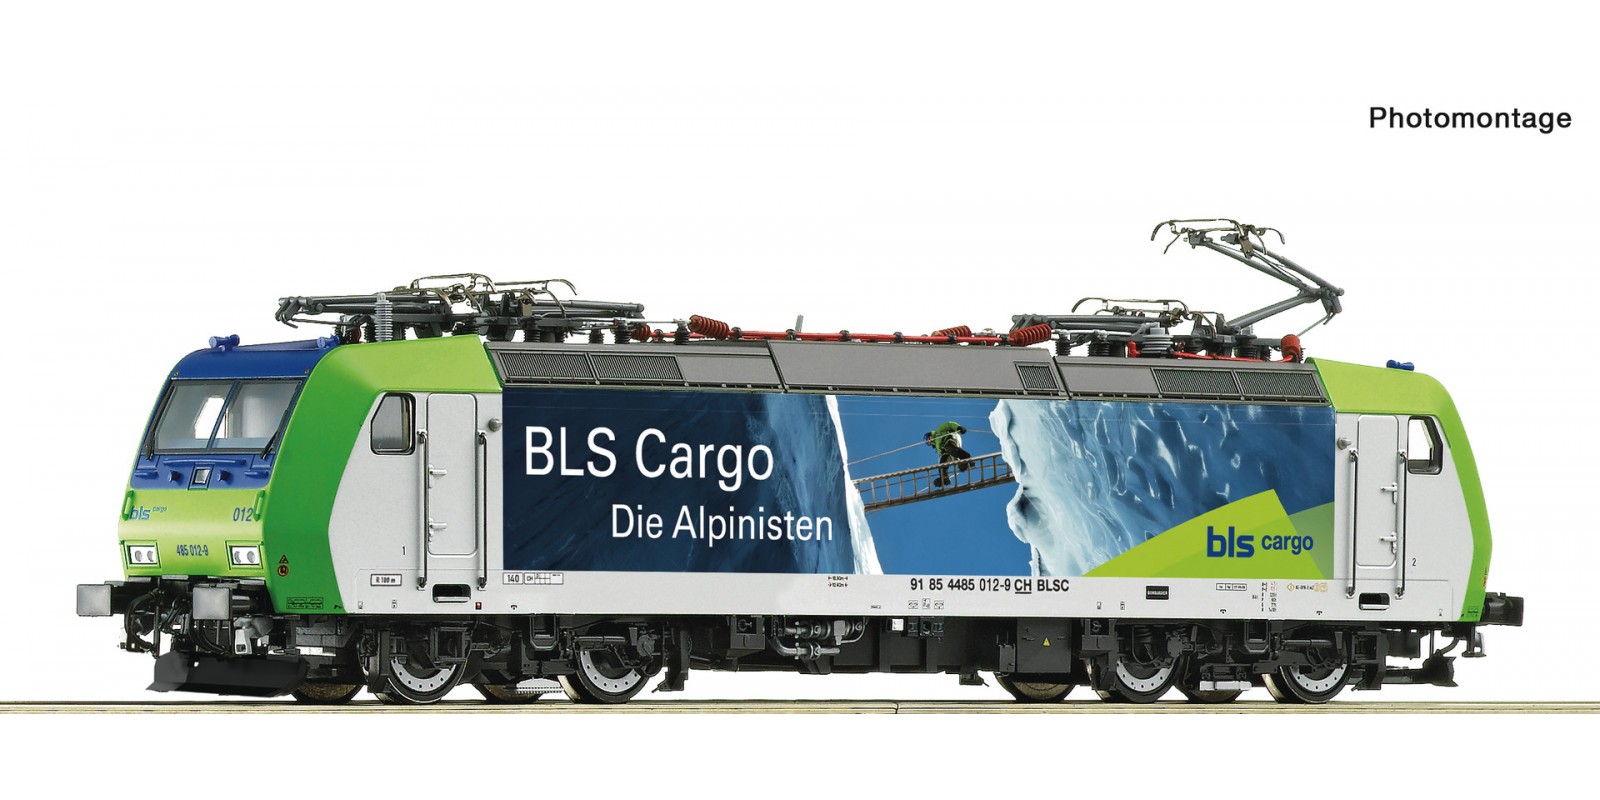 RO70336 Electric locomotive 485 0 12-9, BLS Cargo          